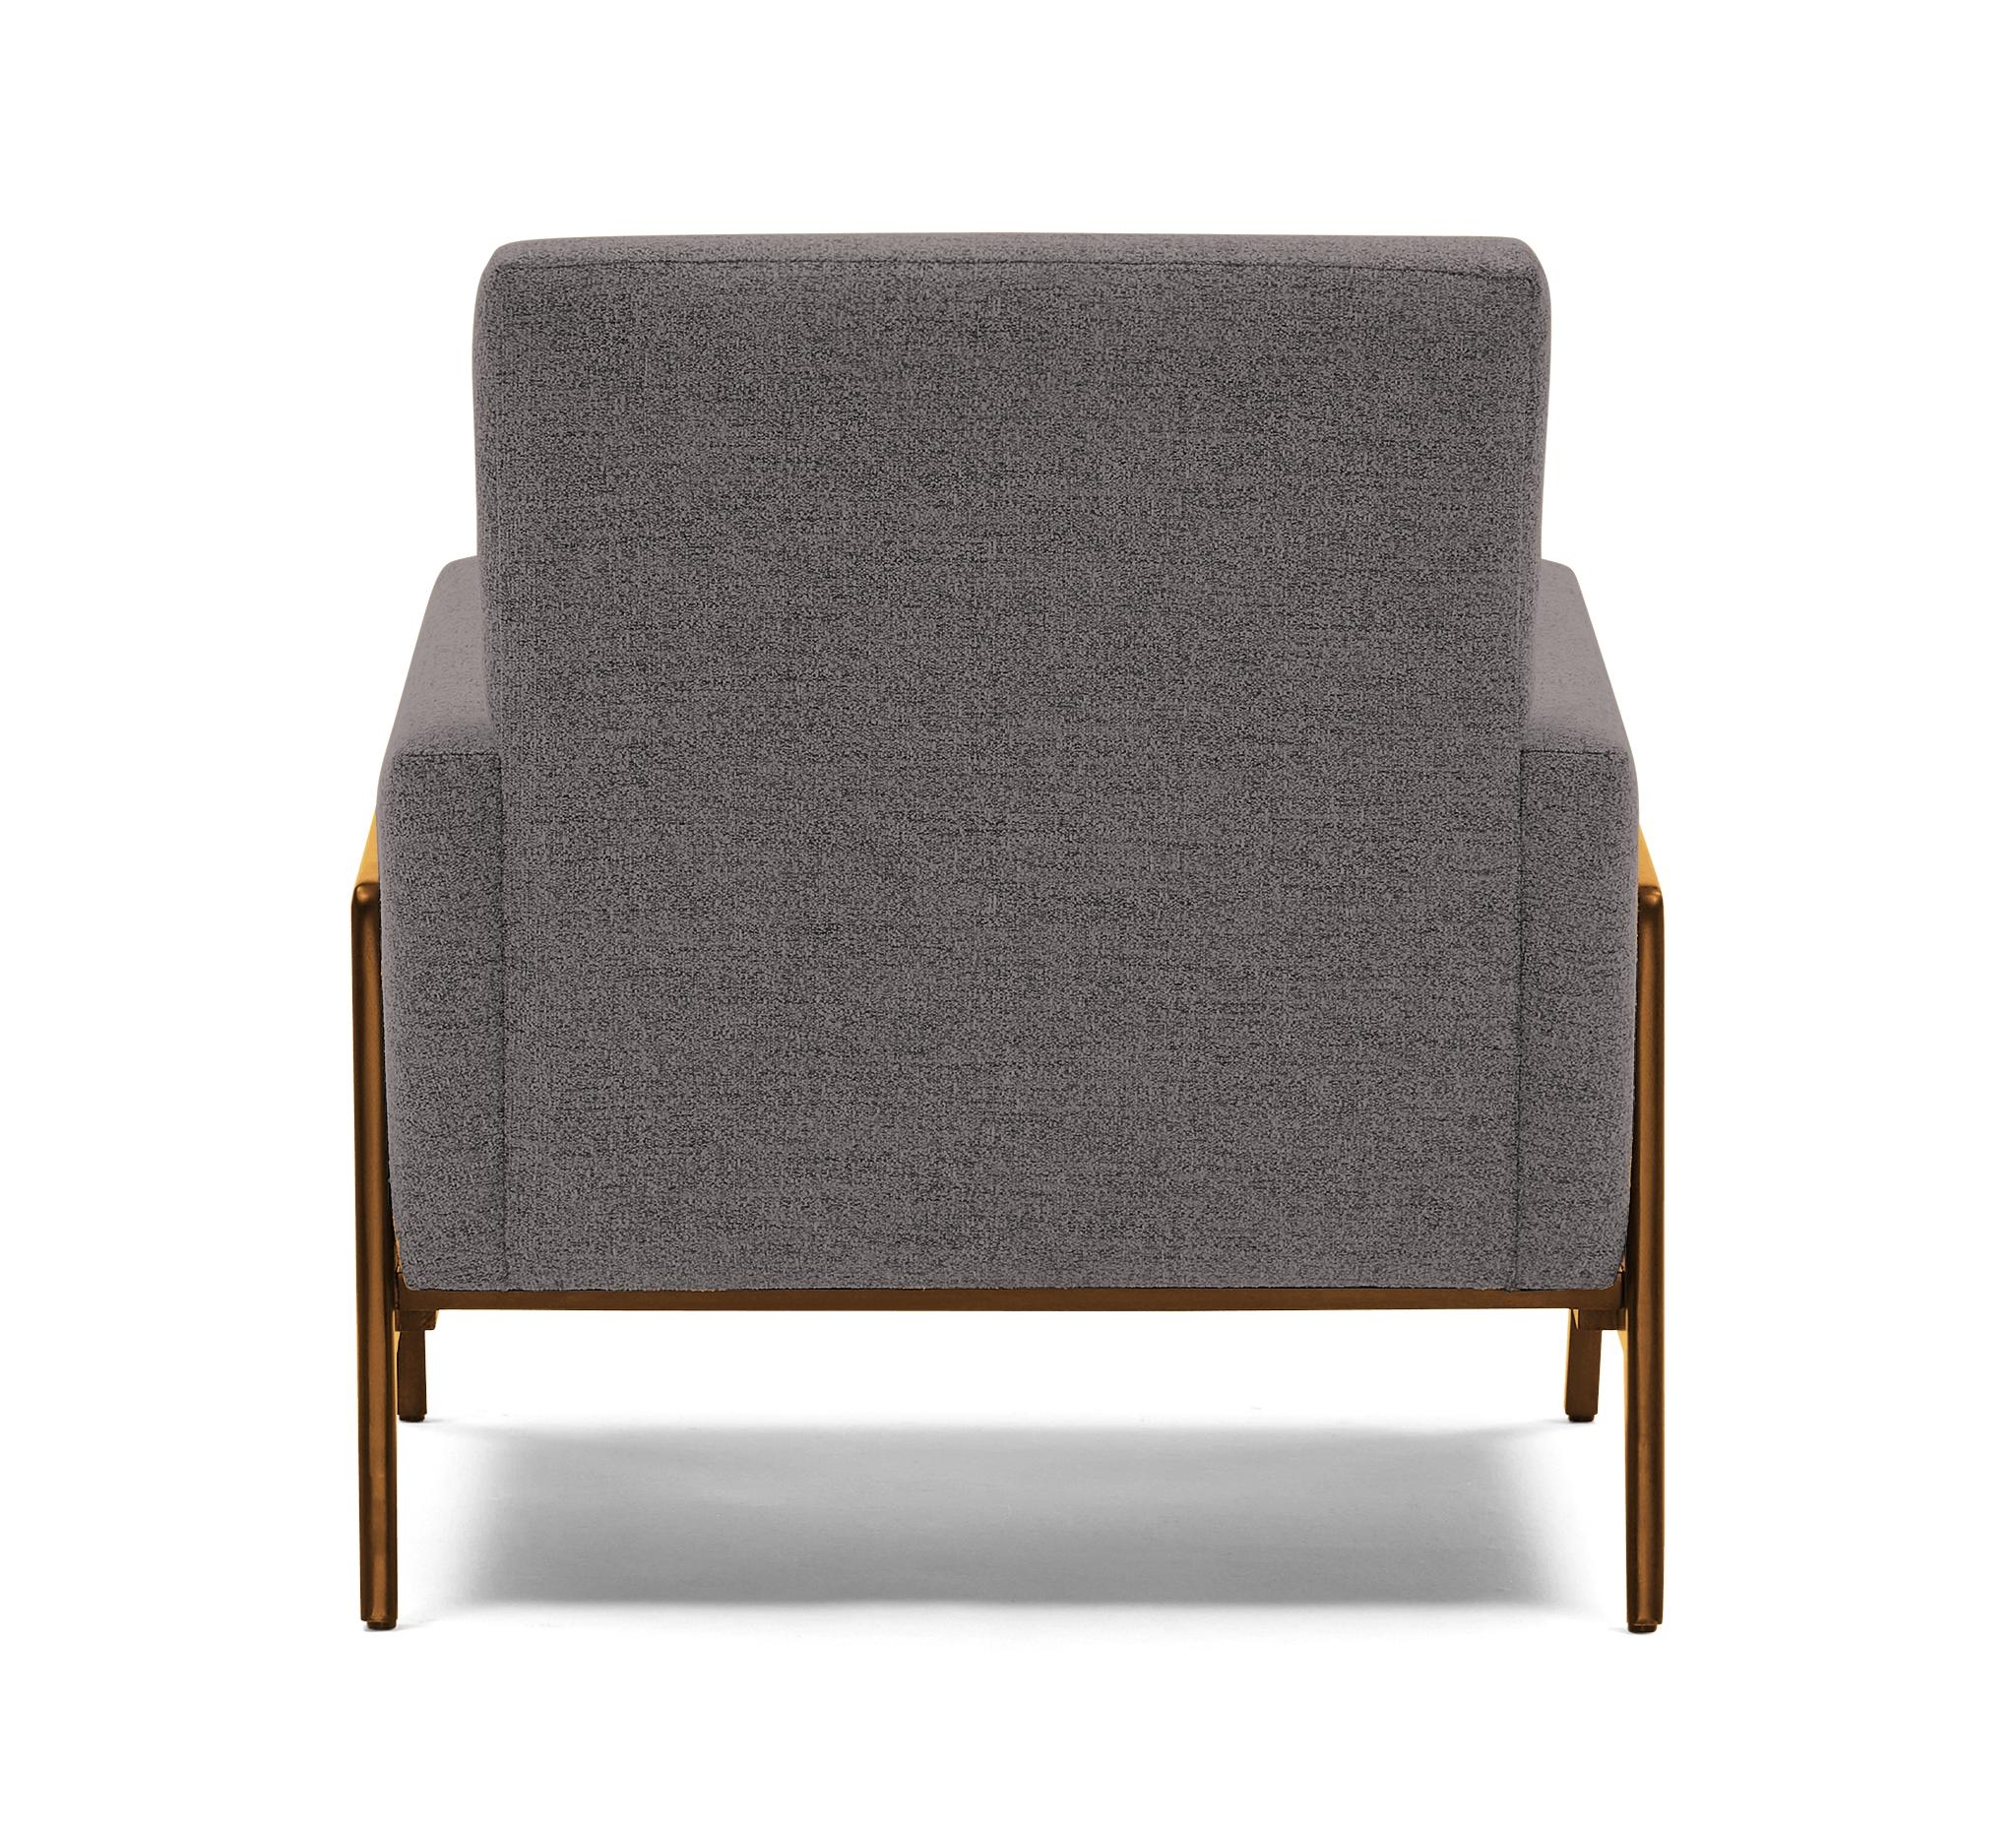 Gray Clyde Mid Century Modern Chair - Taylor Felt Grey - Mocha - Image 4